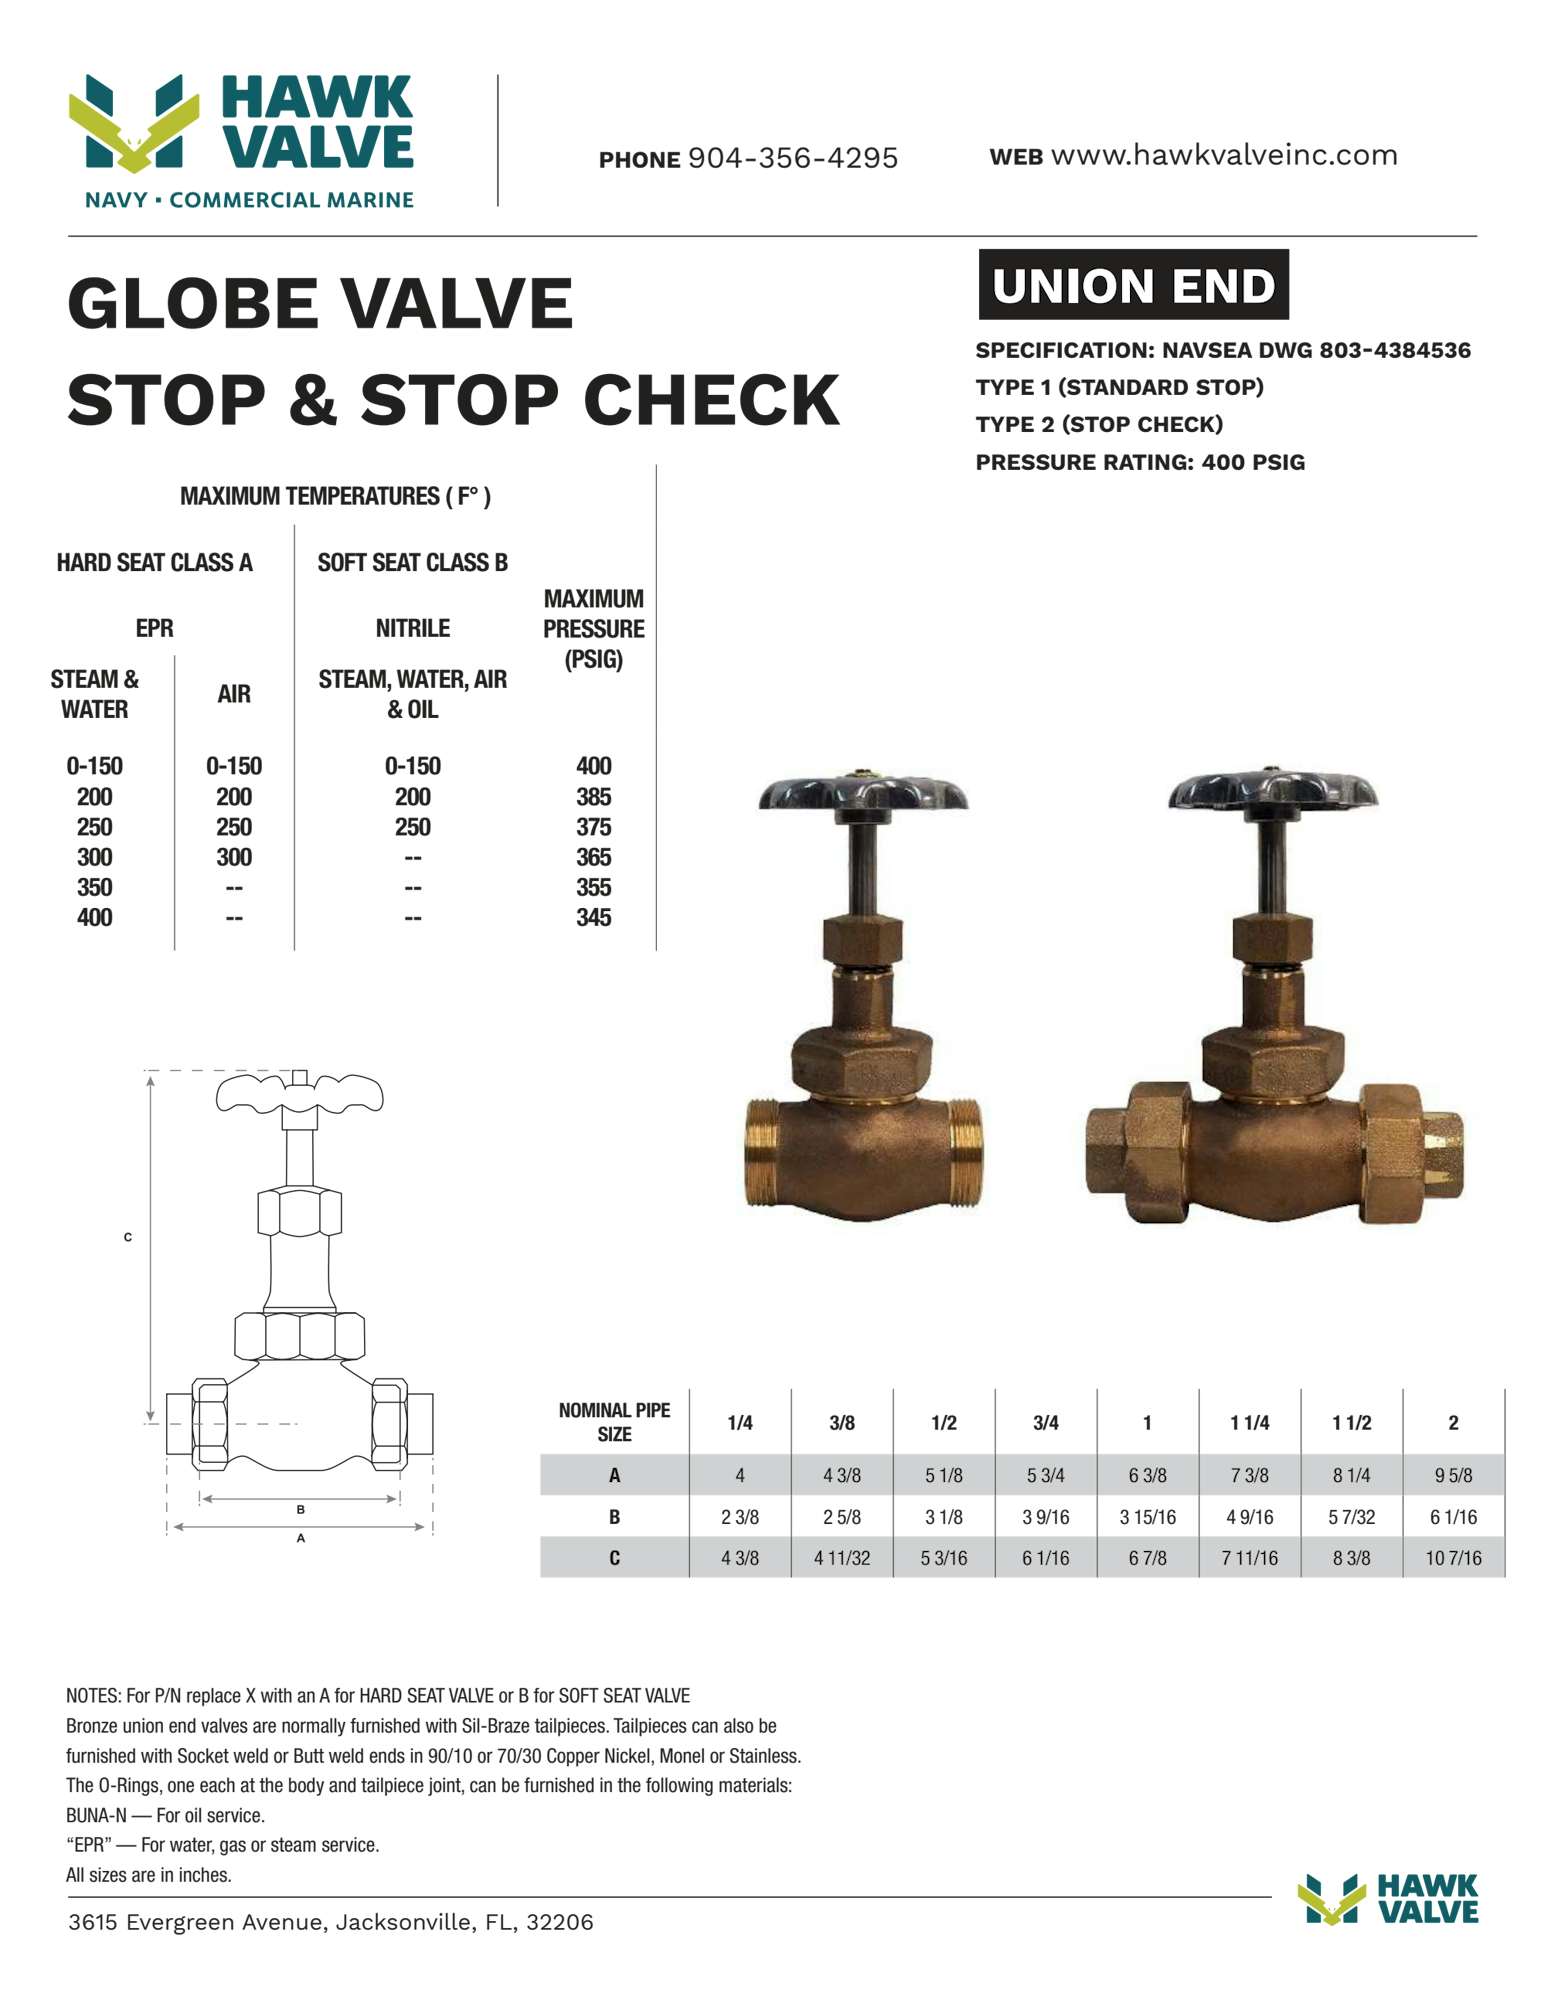 Globe-valve-union-end.pdf